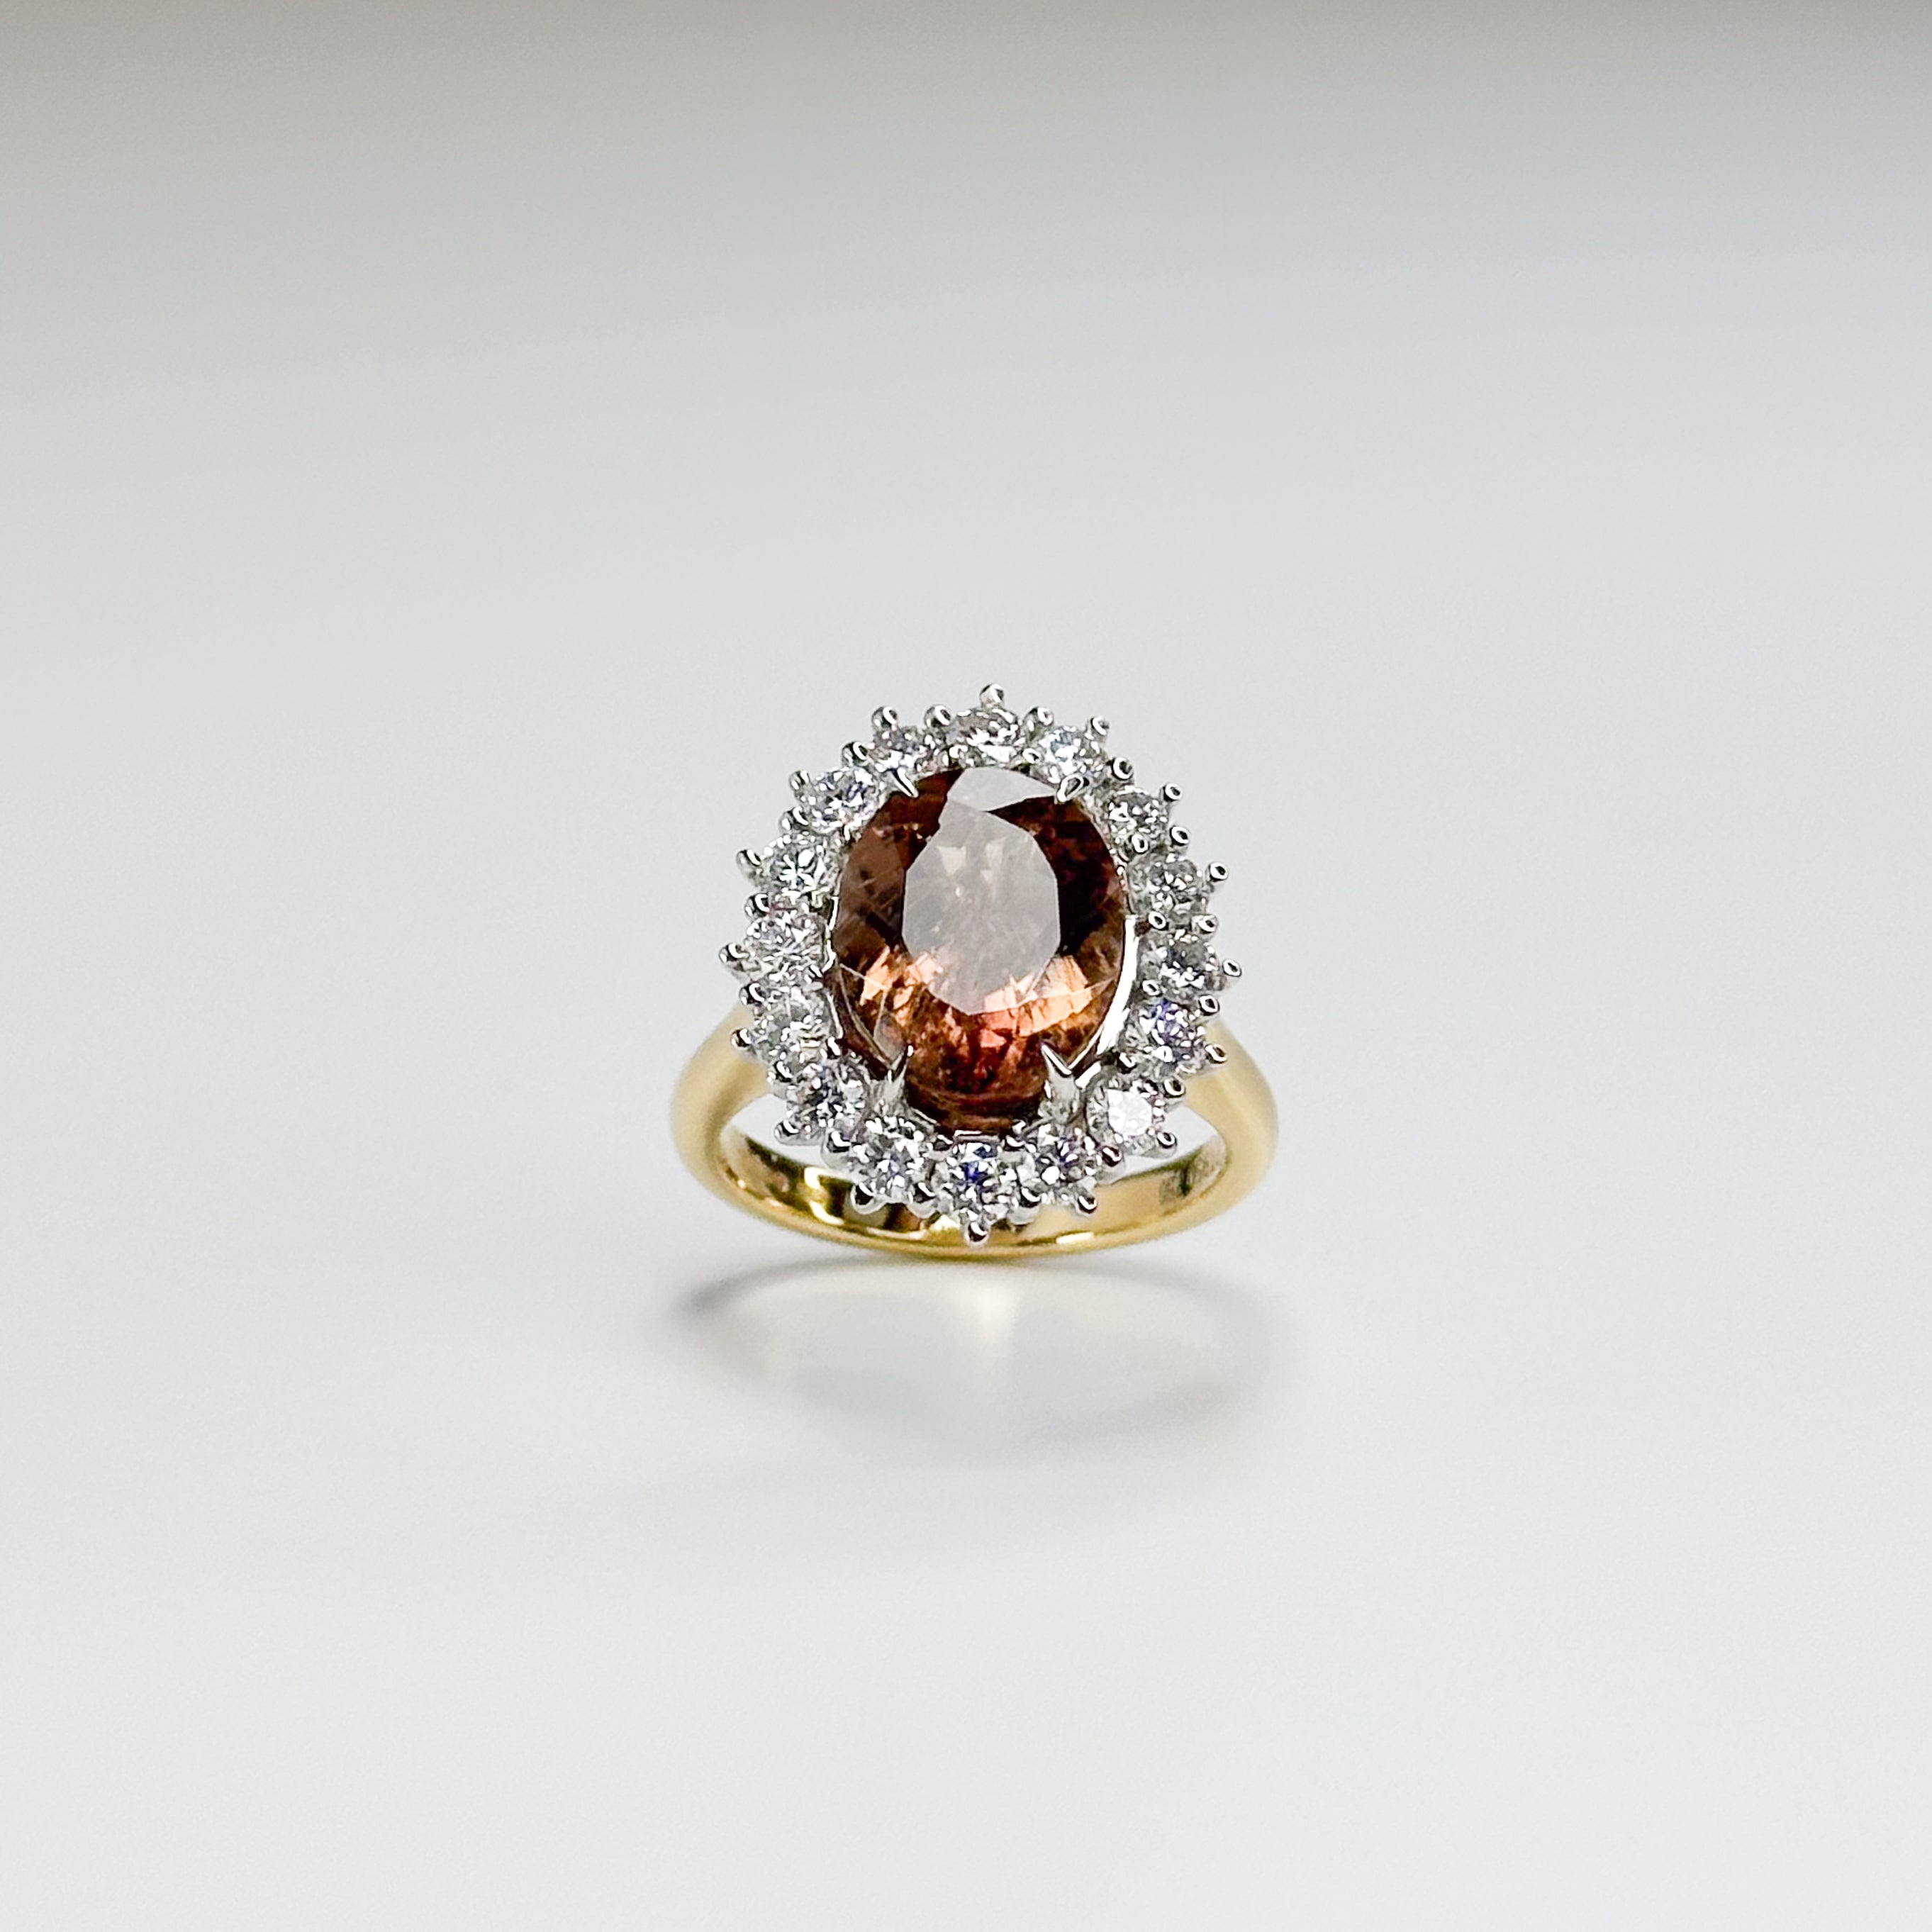 3.72ct Brown Tourmaline Ring with Diamond Halo